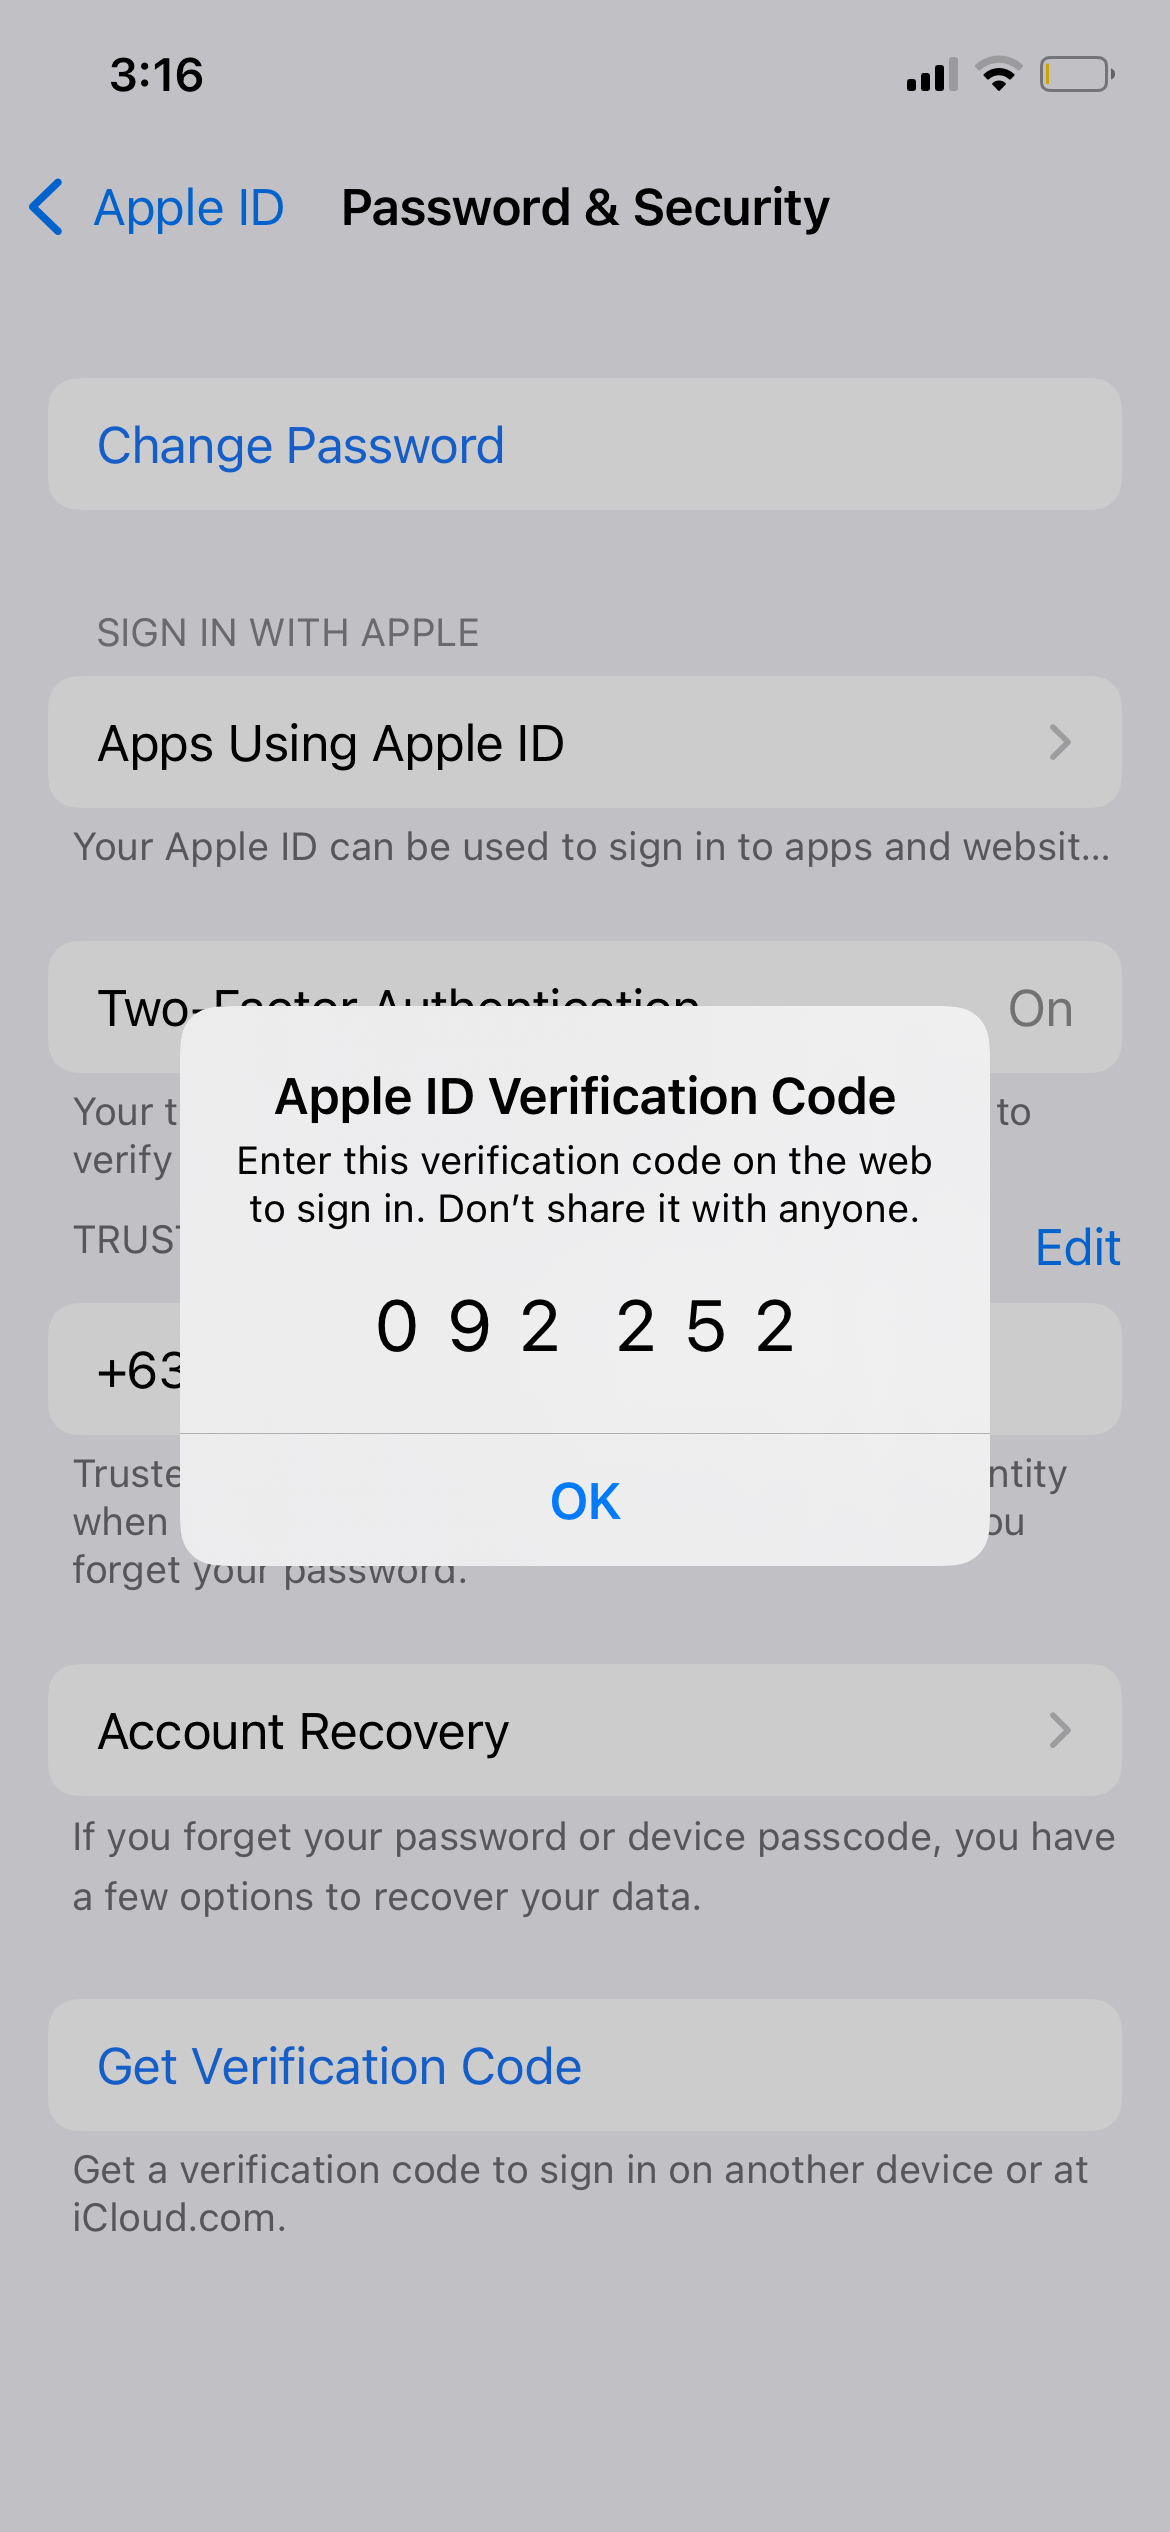 Apple-ID-Verification-Code-on-iPhone-1